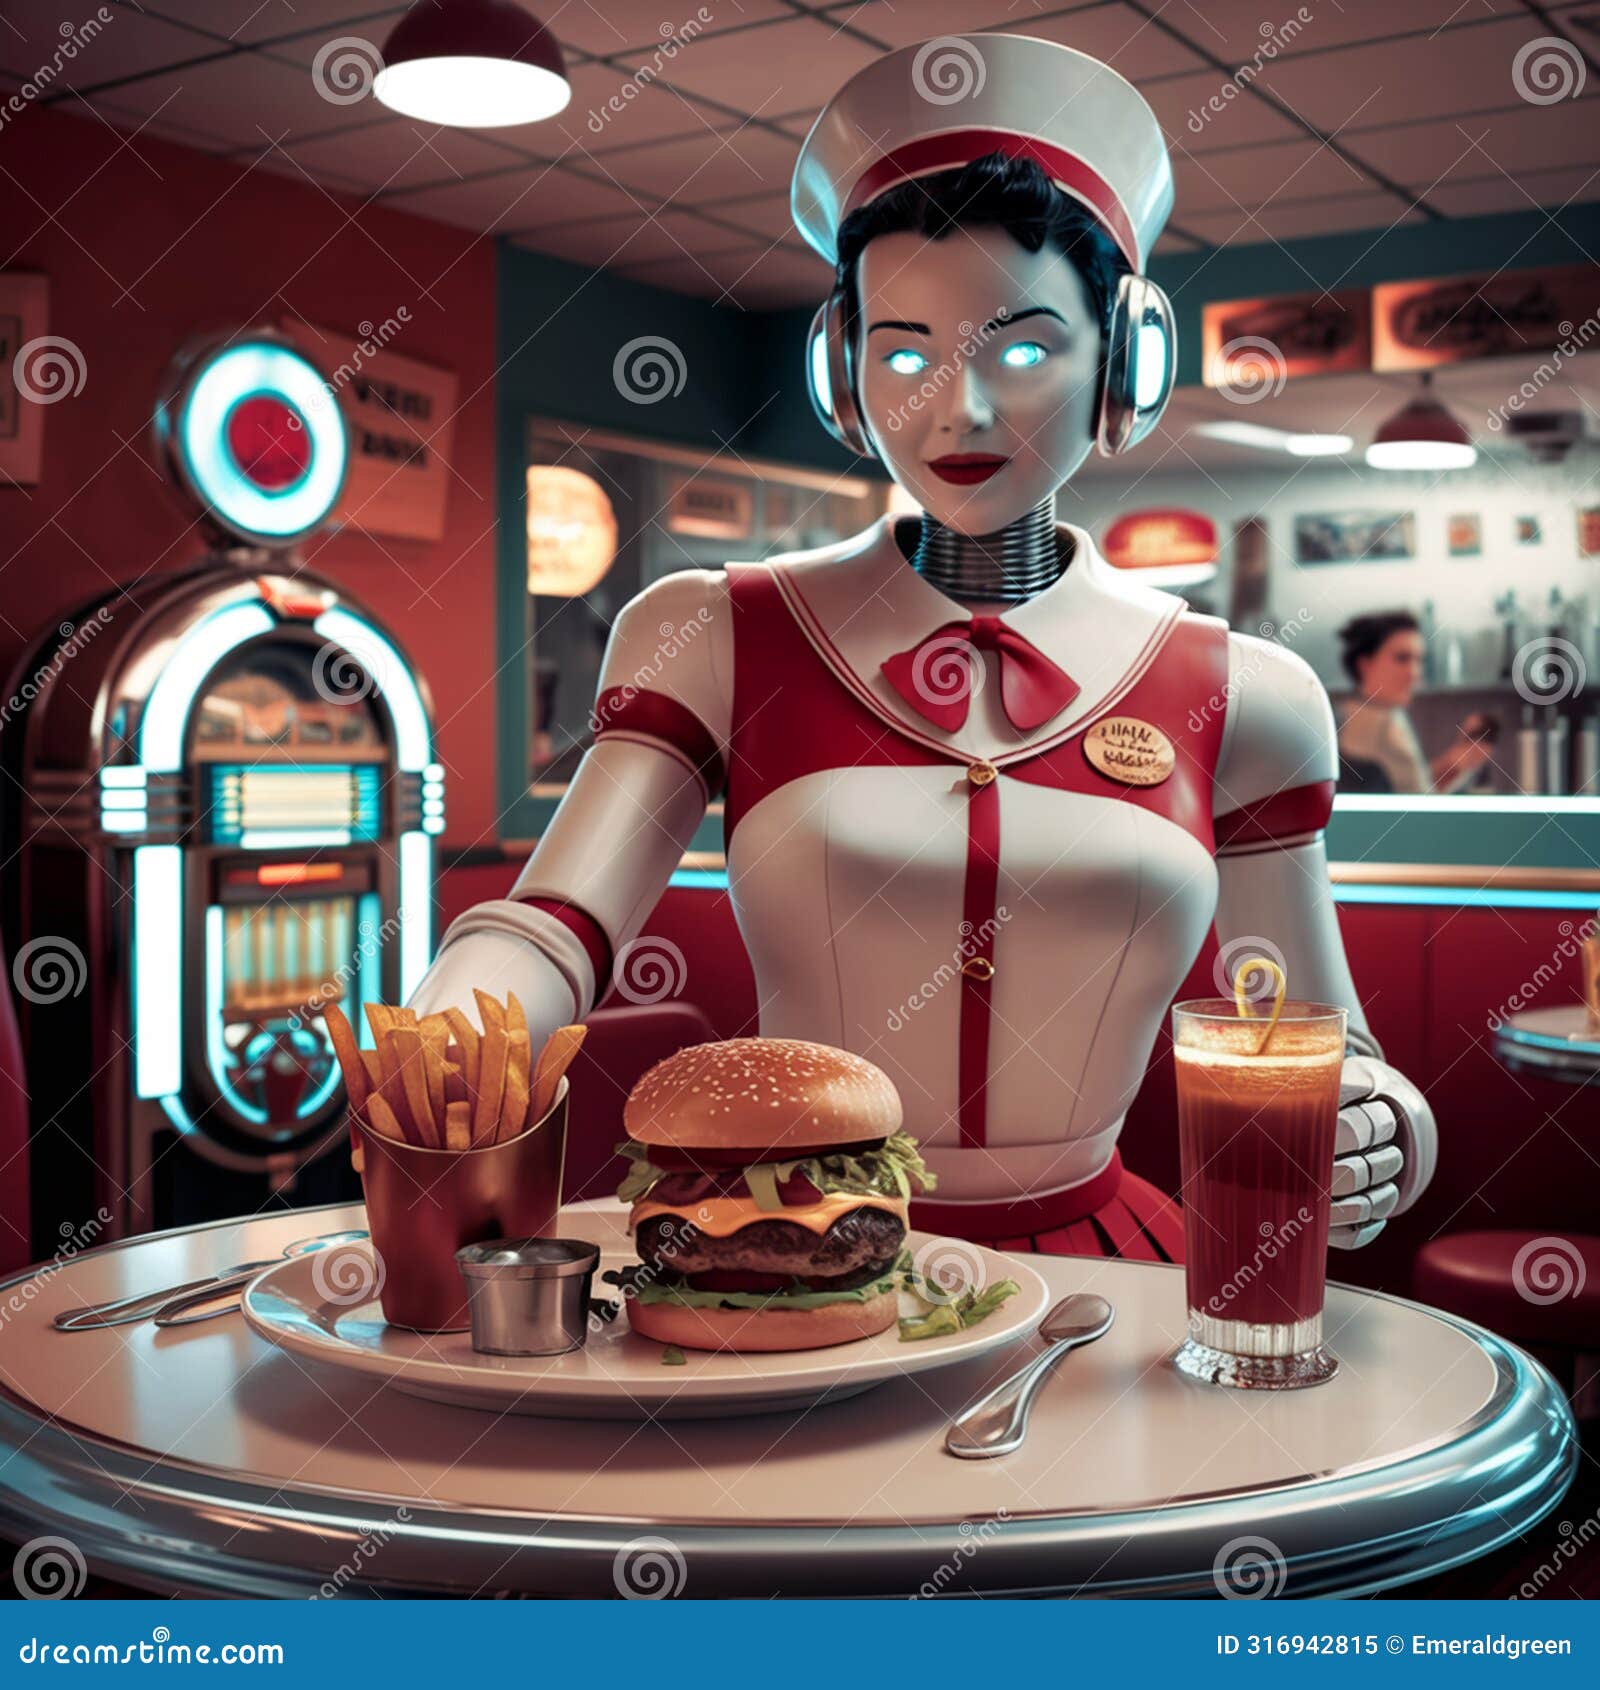 robot waitress in 50's retro diner